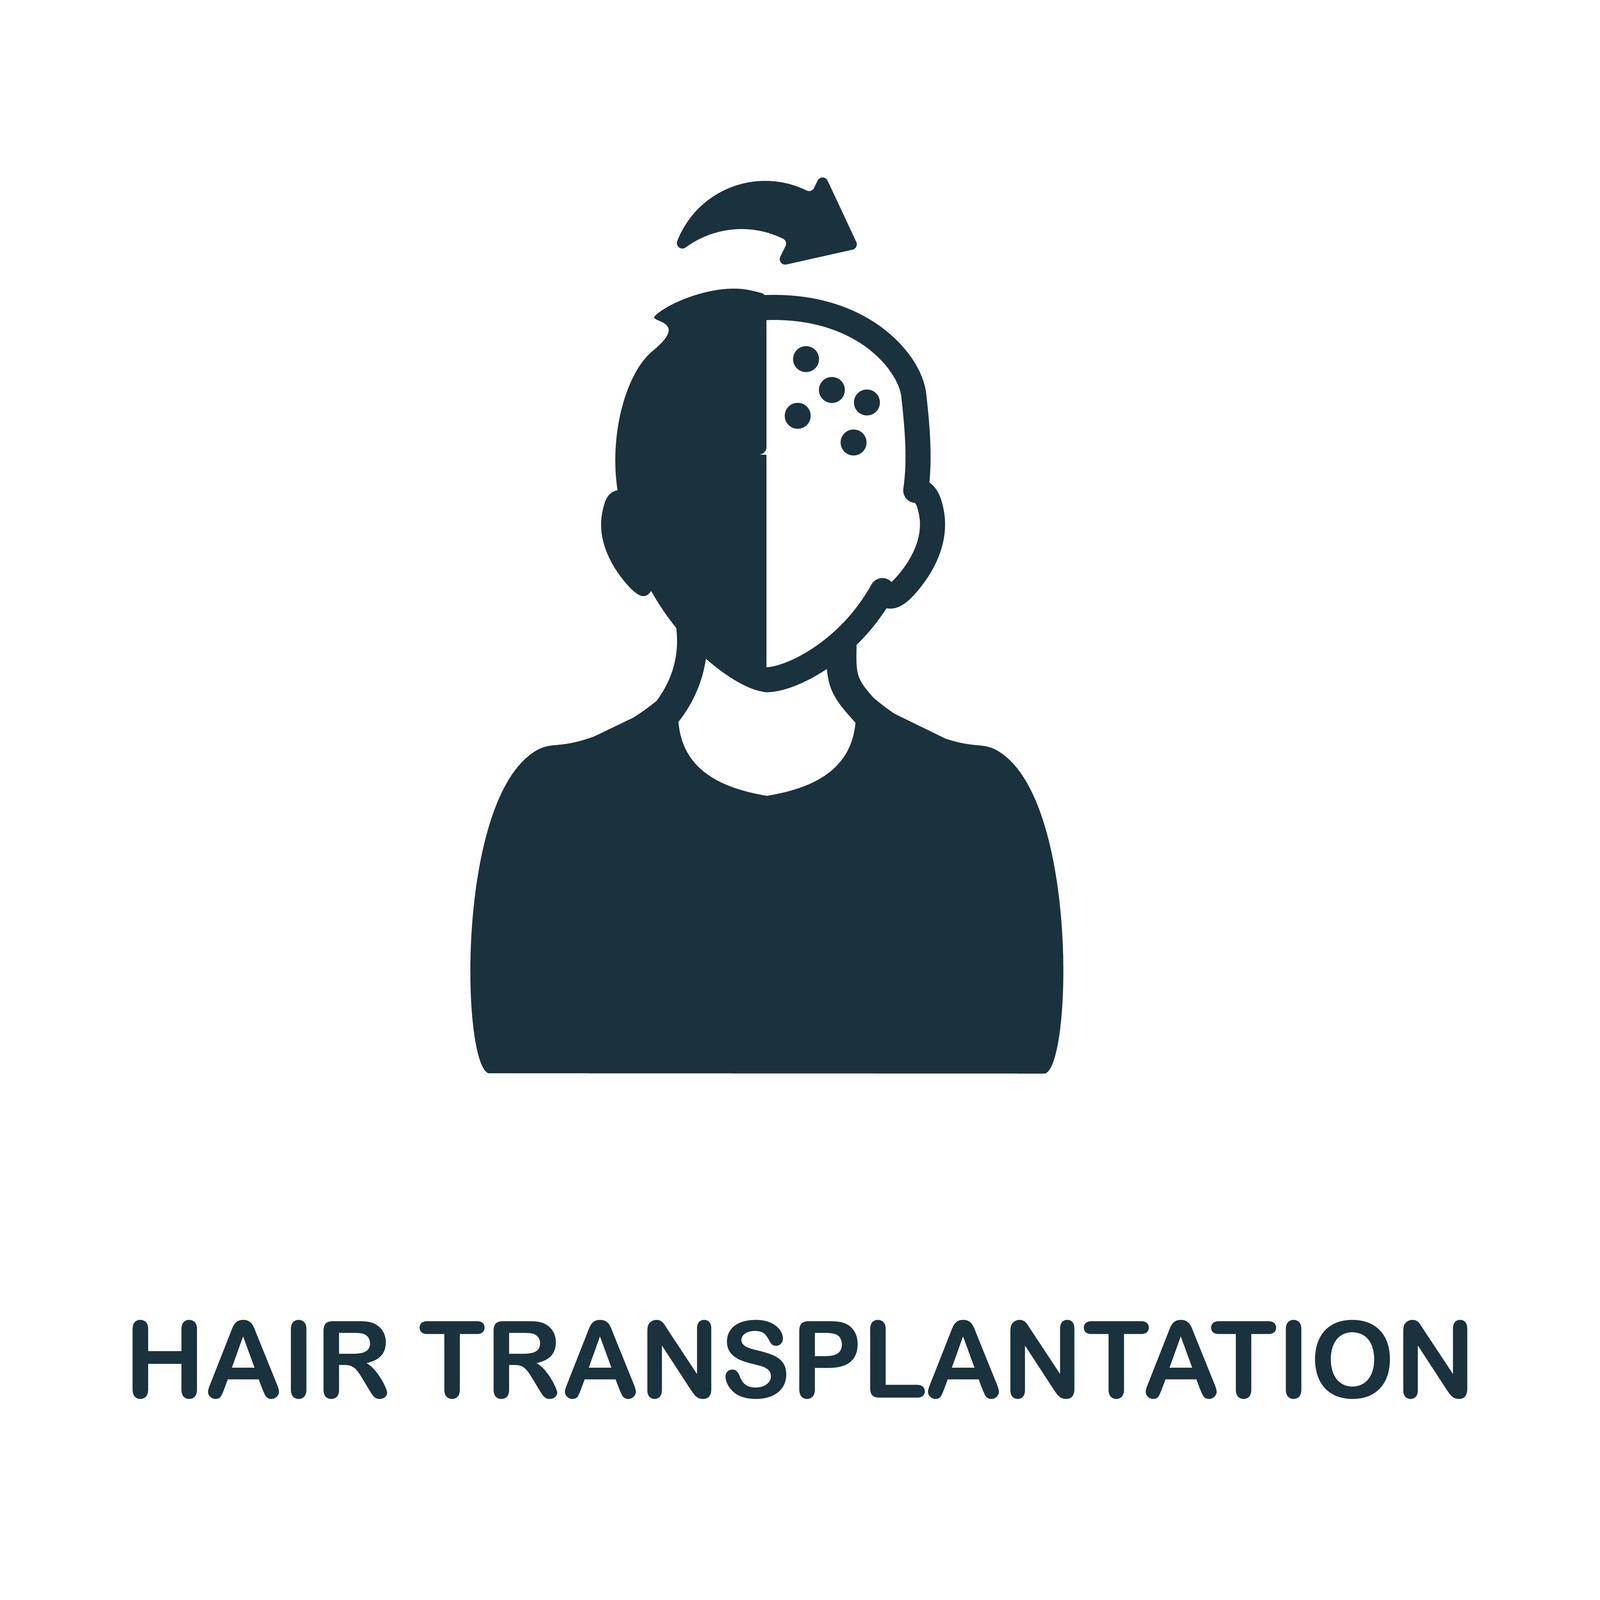 Hair Transplantation flat icon. Simple colors elements from transplantation collection. Flat Hair Transplantation icon for graphics, wed design and more.